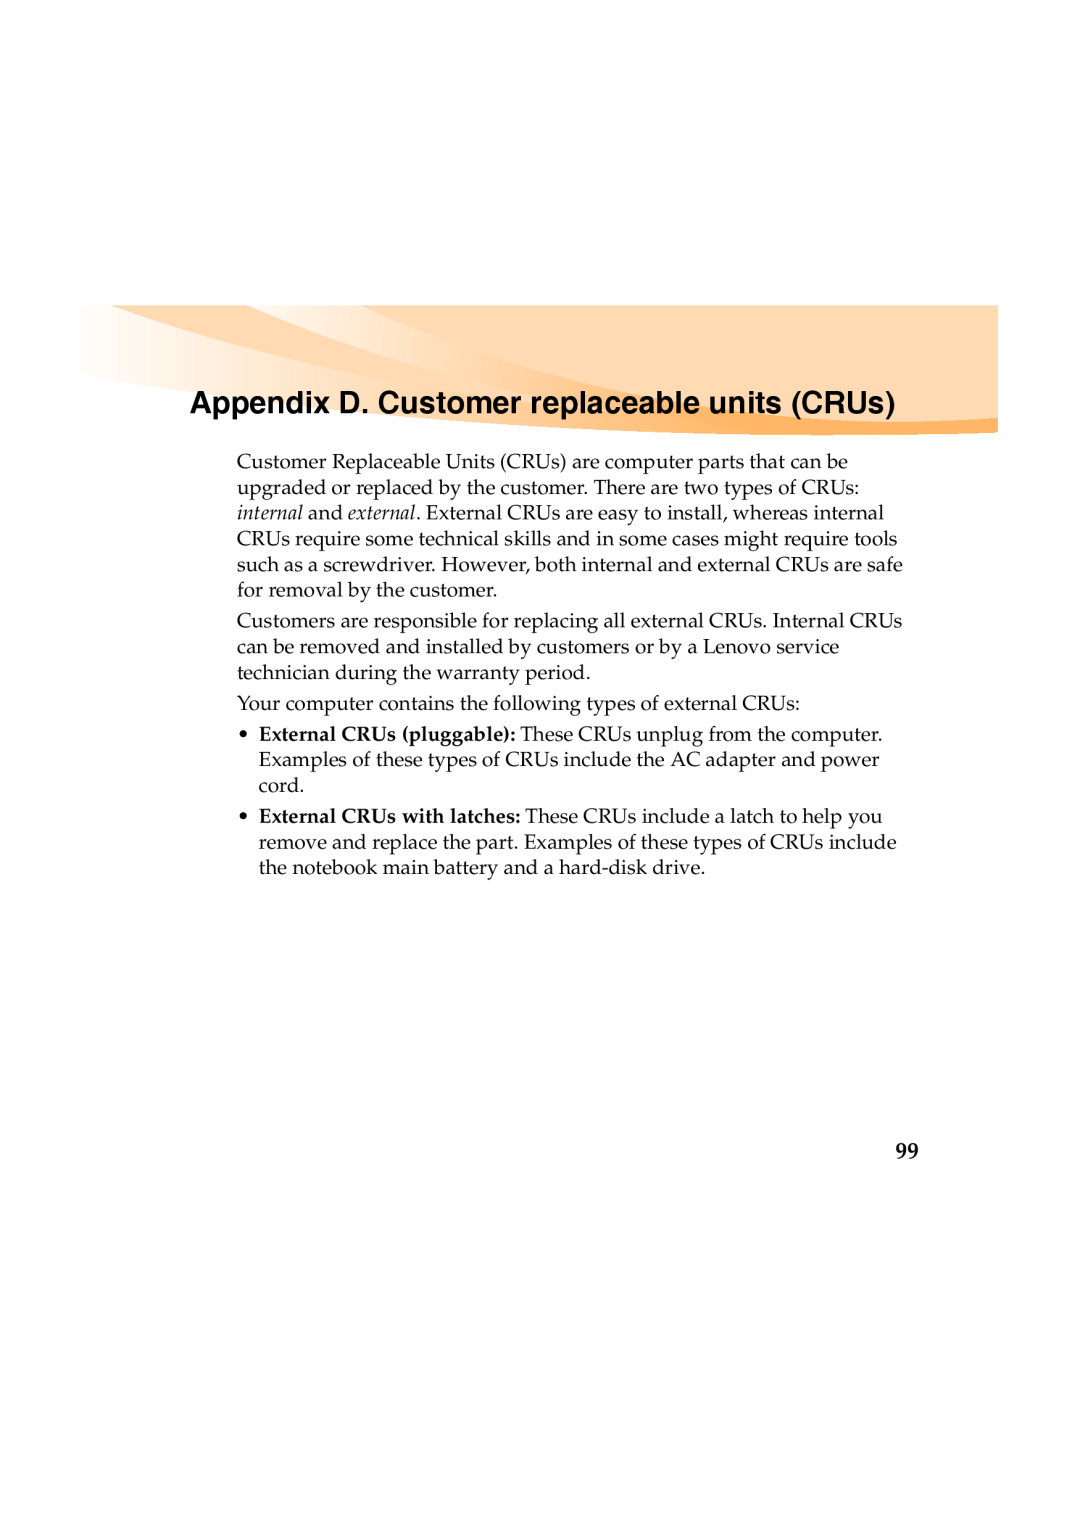 Lenovo Y460 manual Appendix D. Customer replaceable units CRUs 